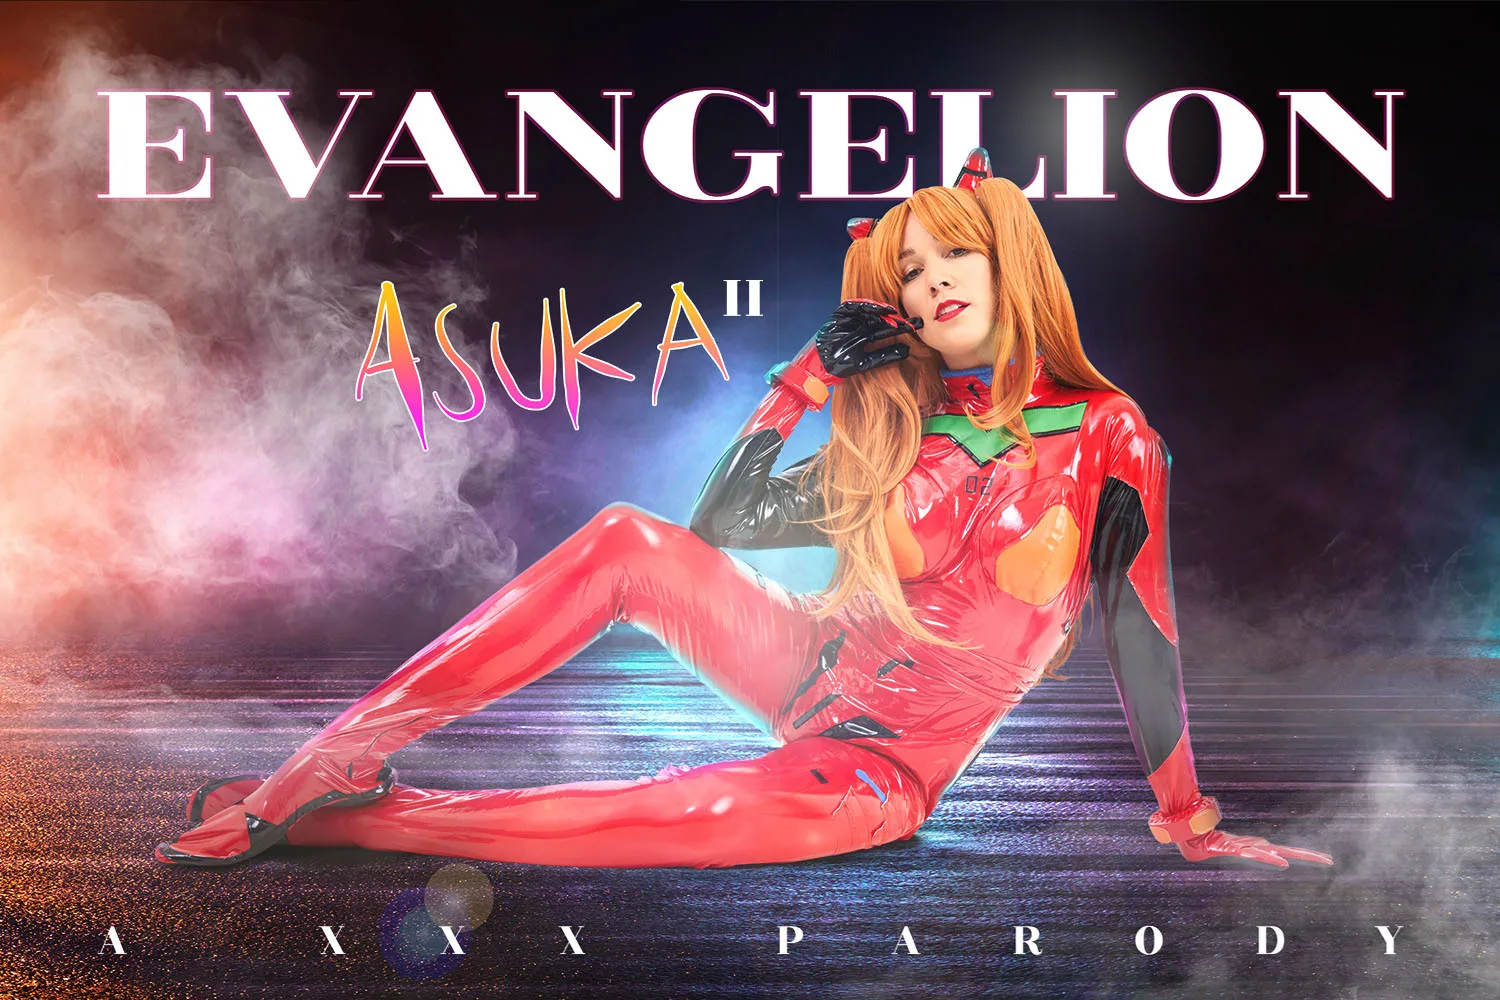 [2021-09-16] Evangelion: Asuka 2 A XXX Parody - VRCosplayX